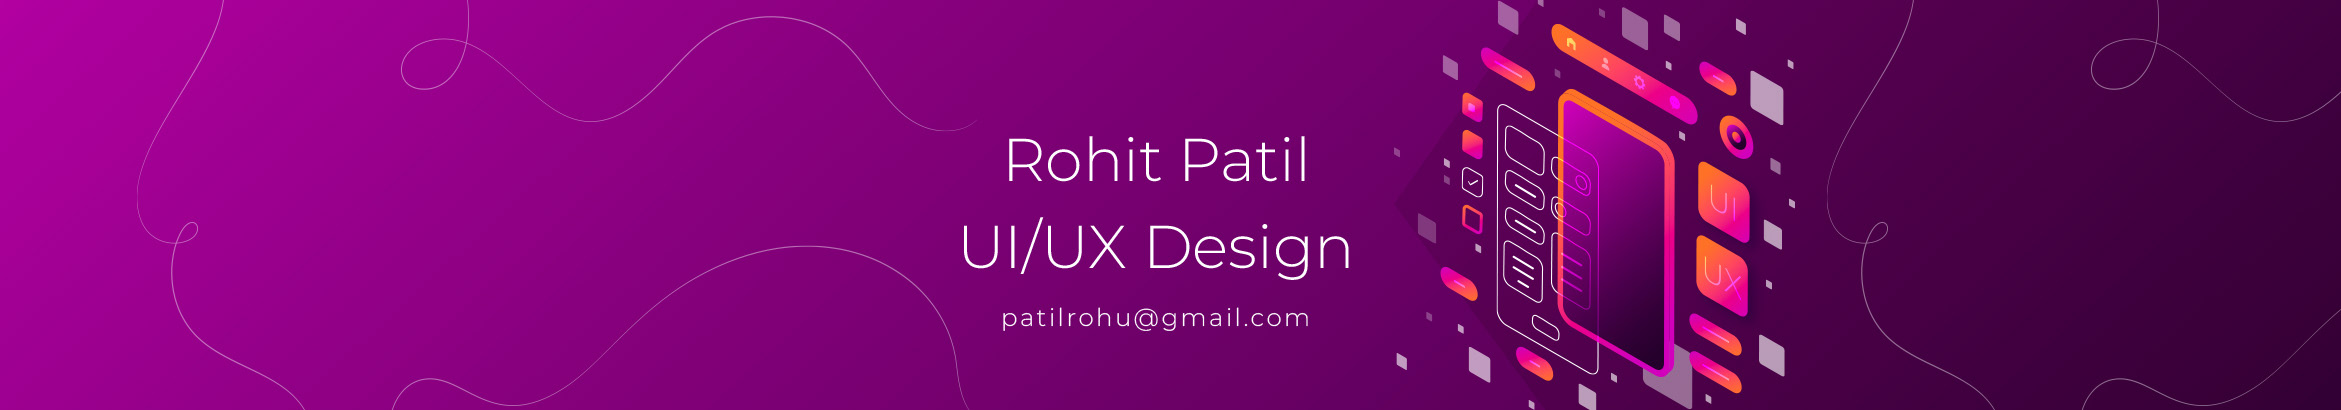 Rohit Patils profilbanner